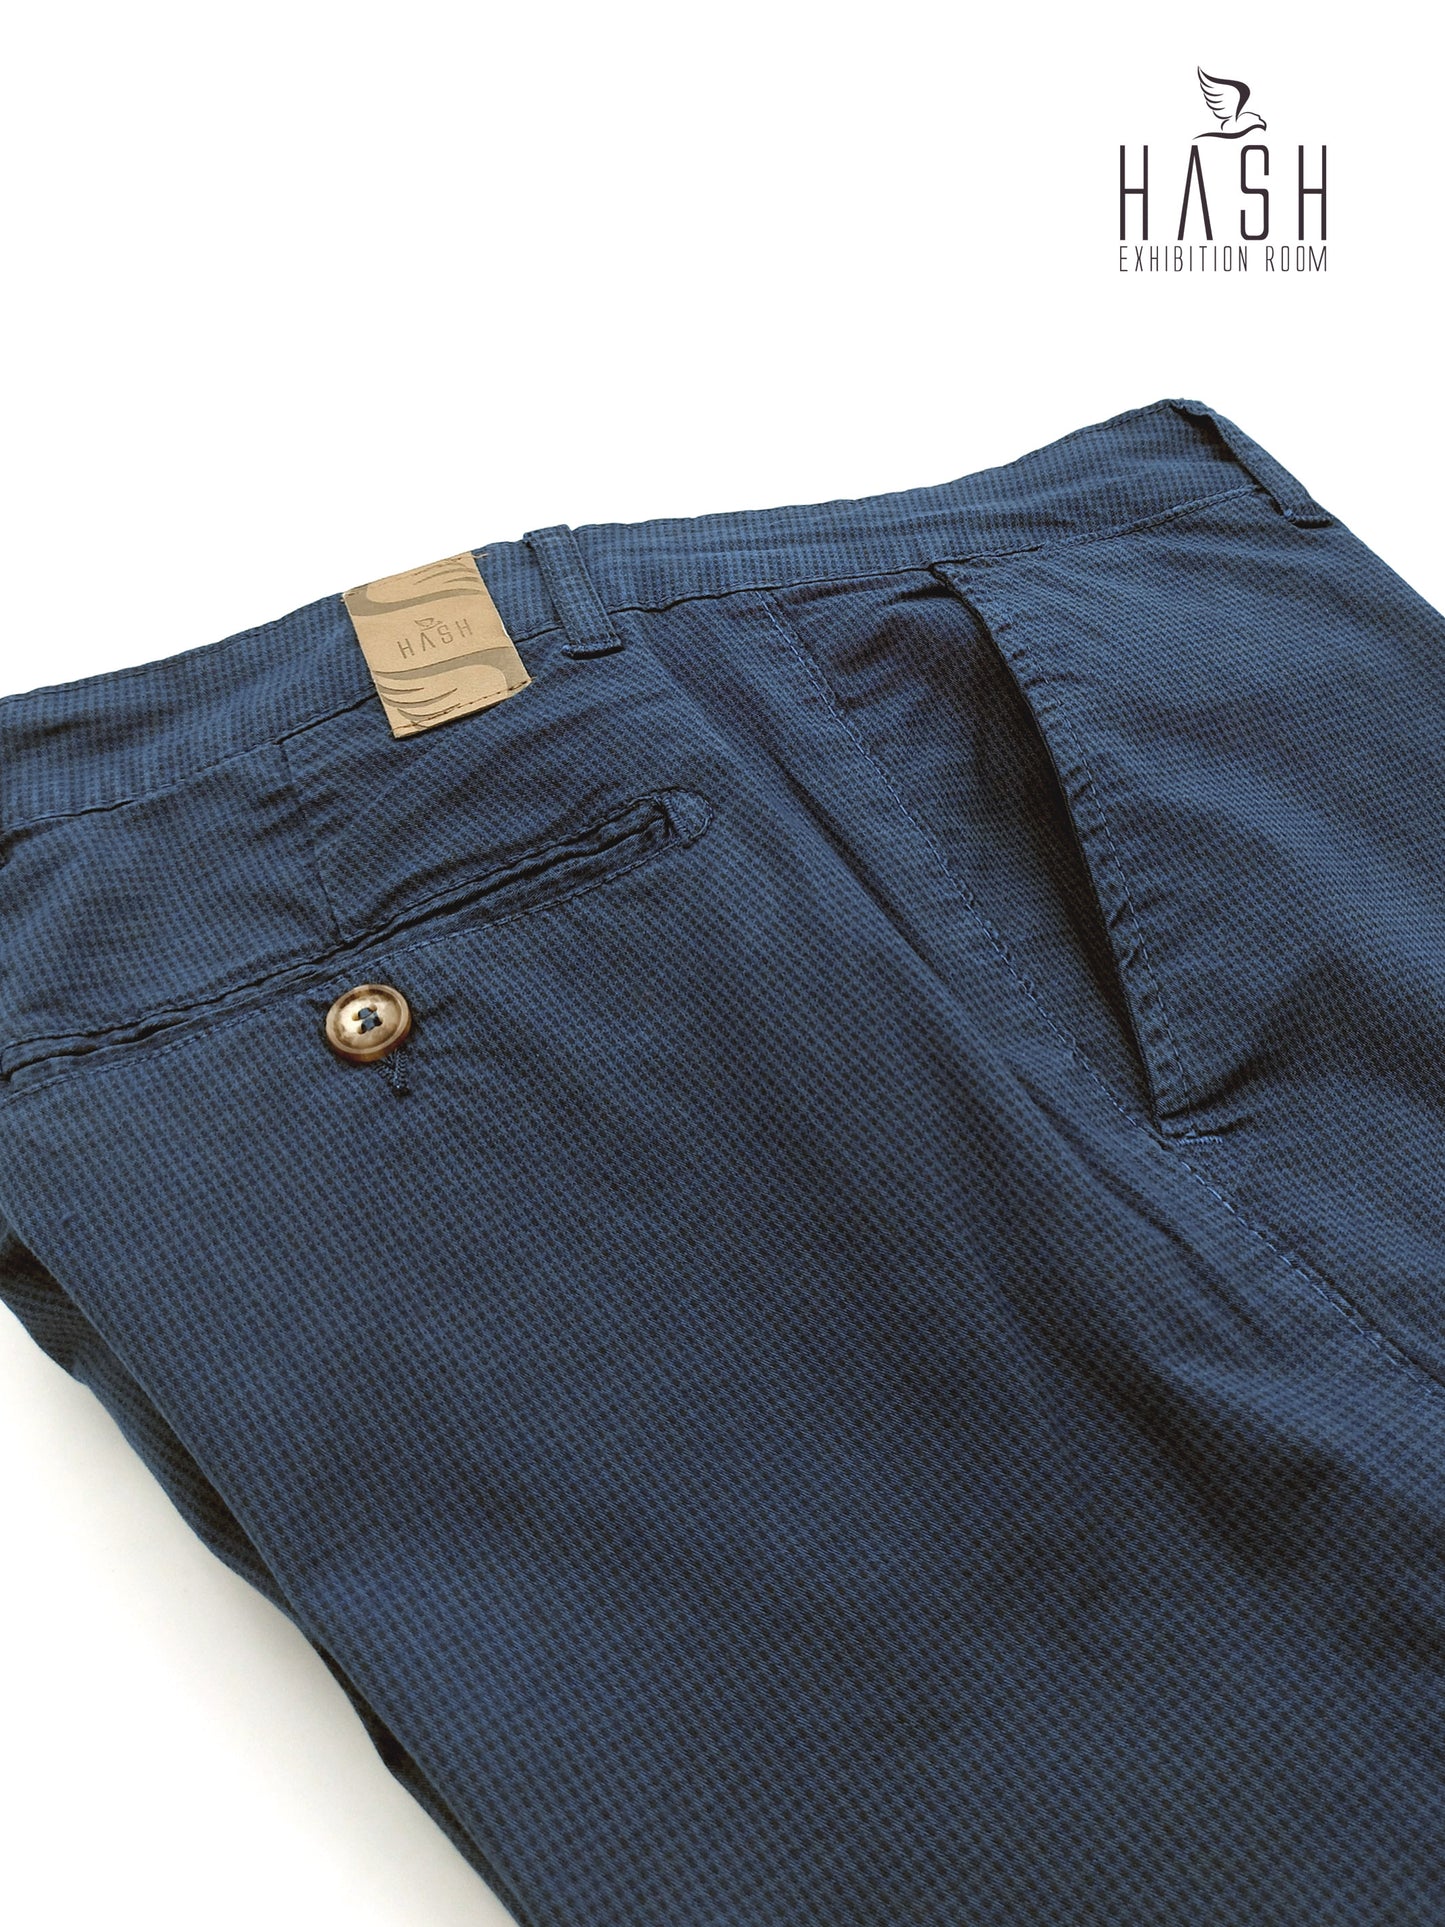 Pantalone Indaco Modello Chinos in Cotone Microfantasia Geometrica Blu